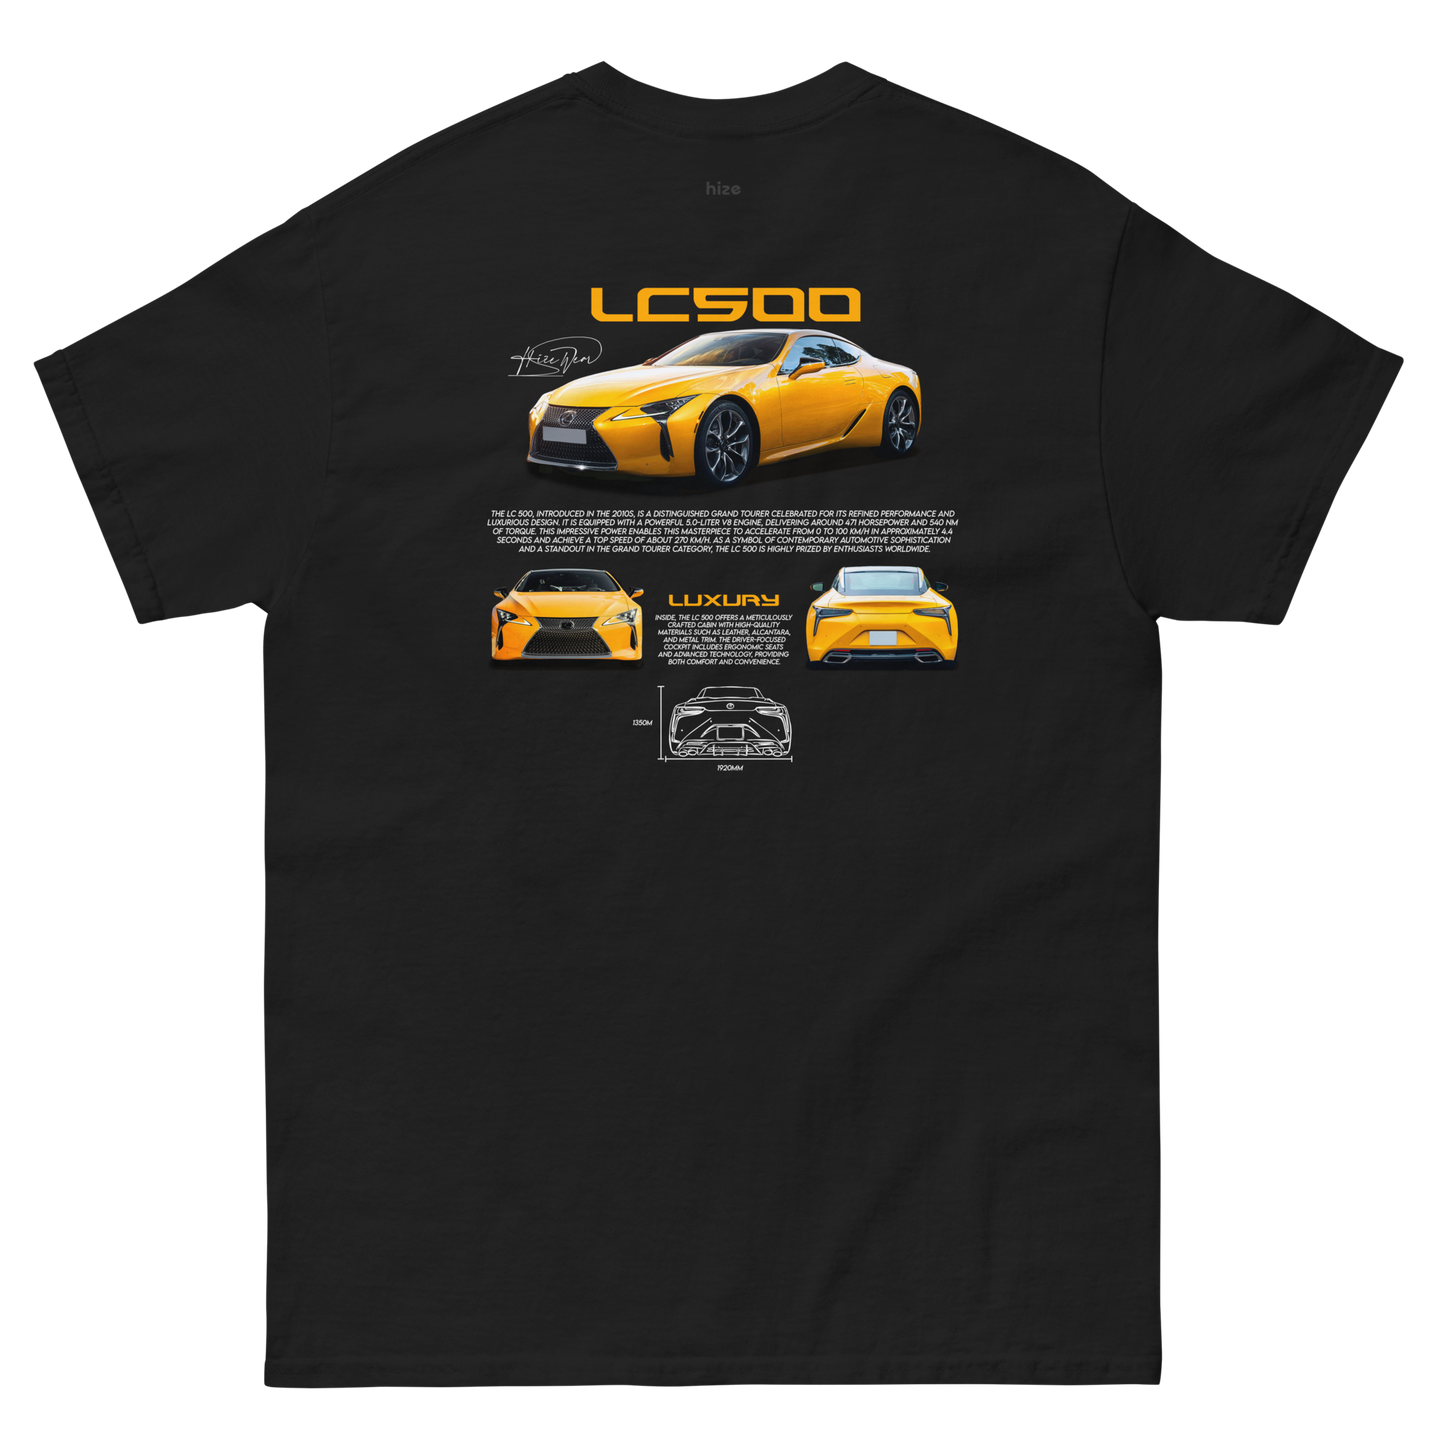 Lexus LC500 T-shirt - Black Back View